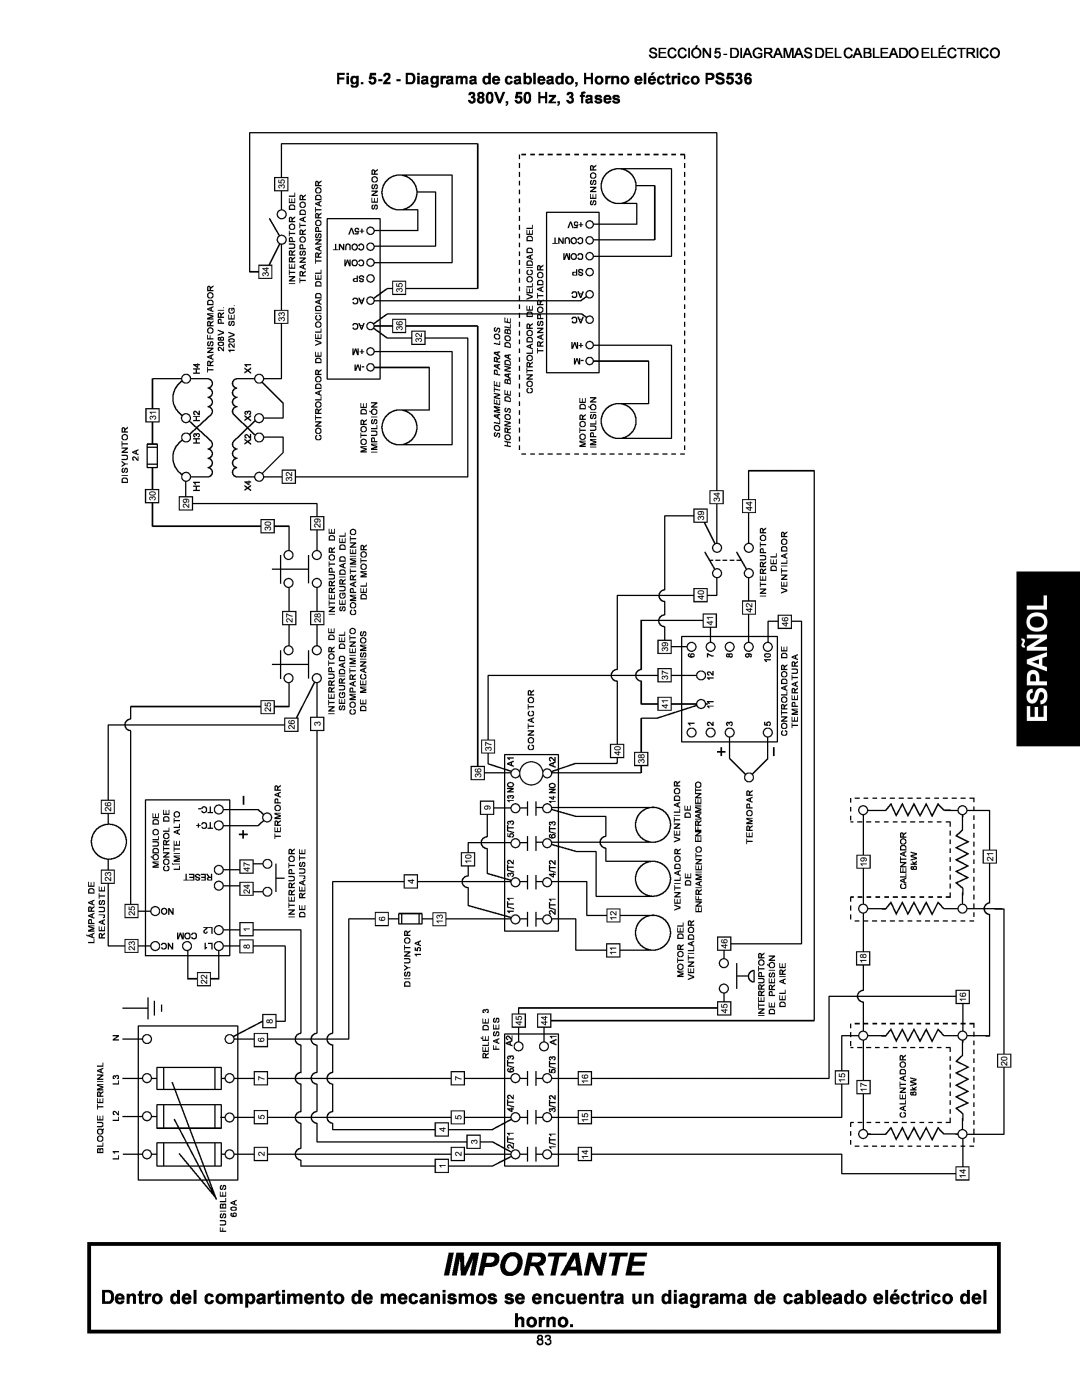 Middleby Marshall Model PS536 Importante, Español, 2 - Diagrama de cableado, Horno eléctrico PS536, 380V, 50 Hz, 3 fases 